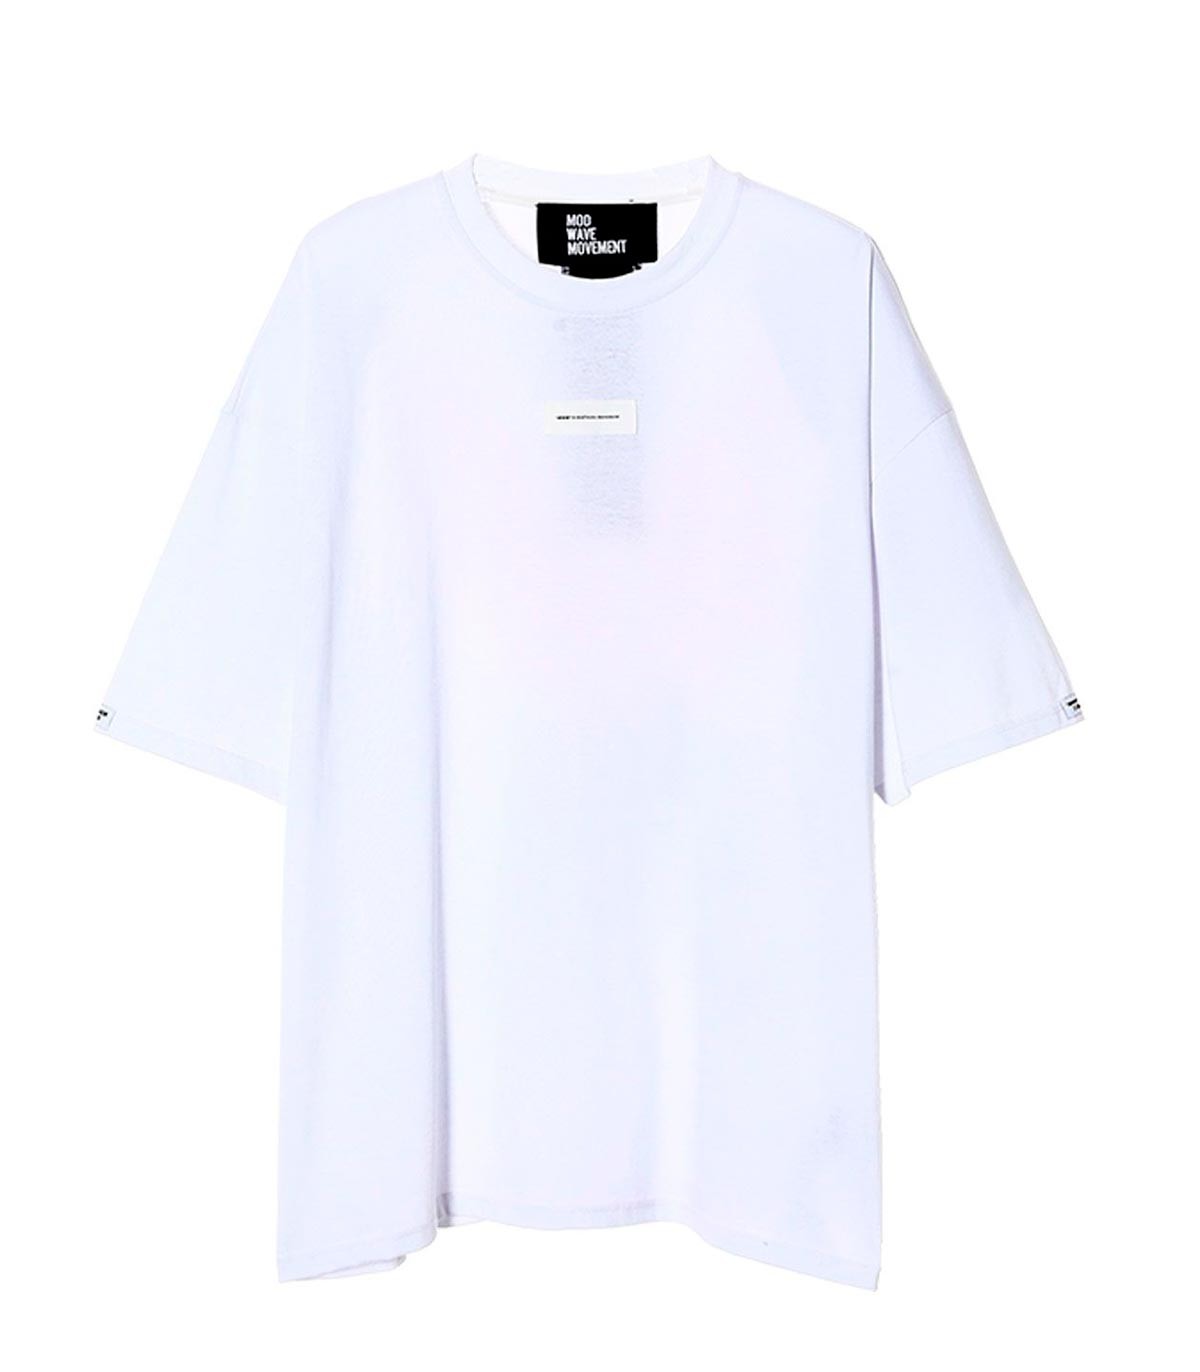 Mod Wave Movement - Camiseta Black Capsule - Blanco